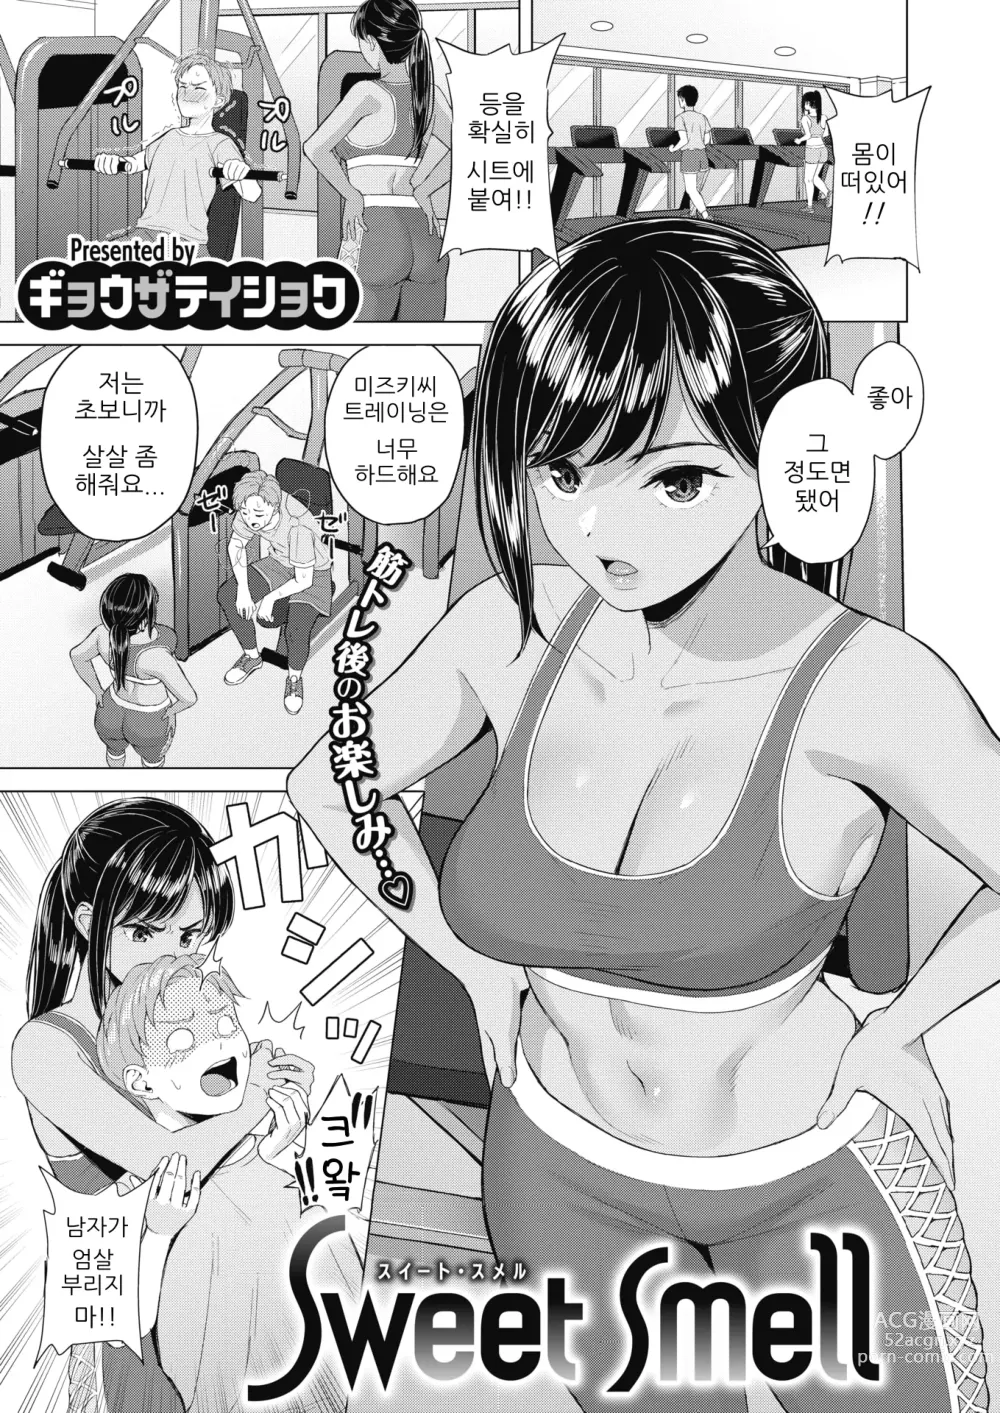 Page 2 of manga Sweet smell